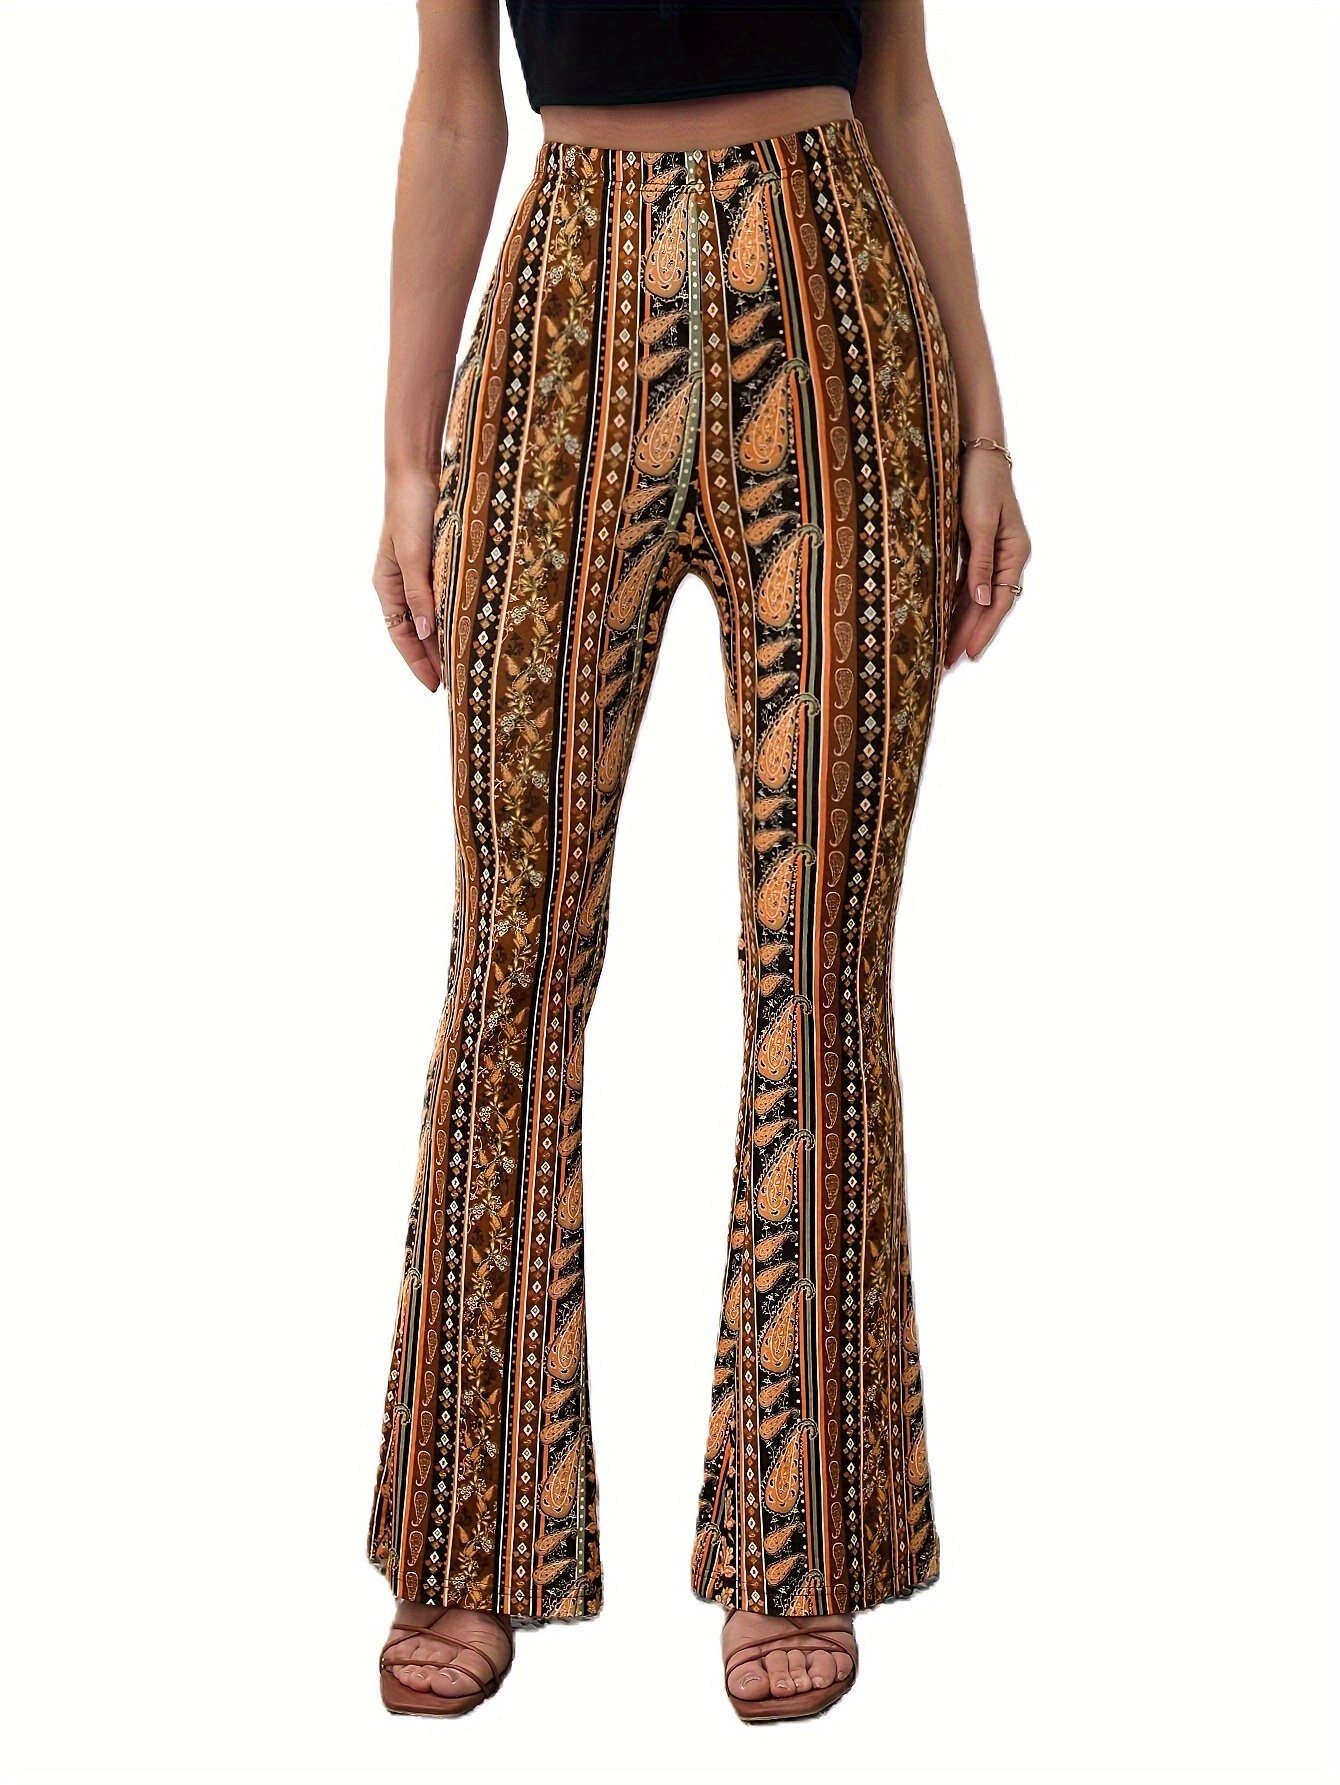 Tribal Print Flare Leg Pants, Casual High Waist Forbidden Pants For Spring  & Fall, Women's Clothing